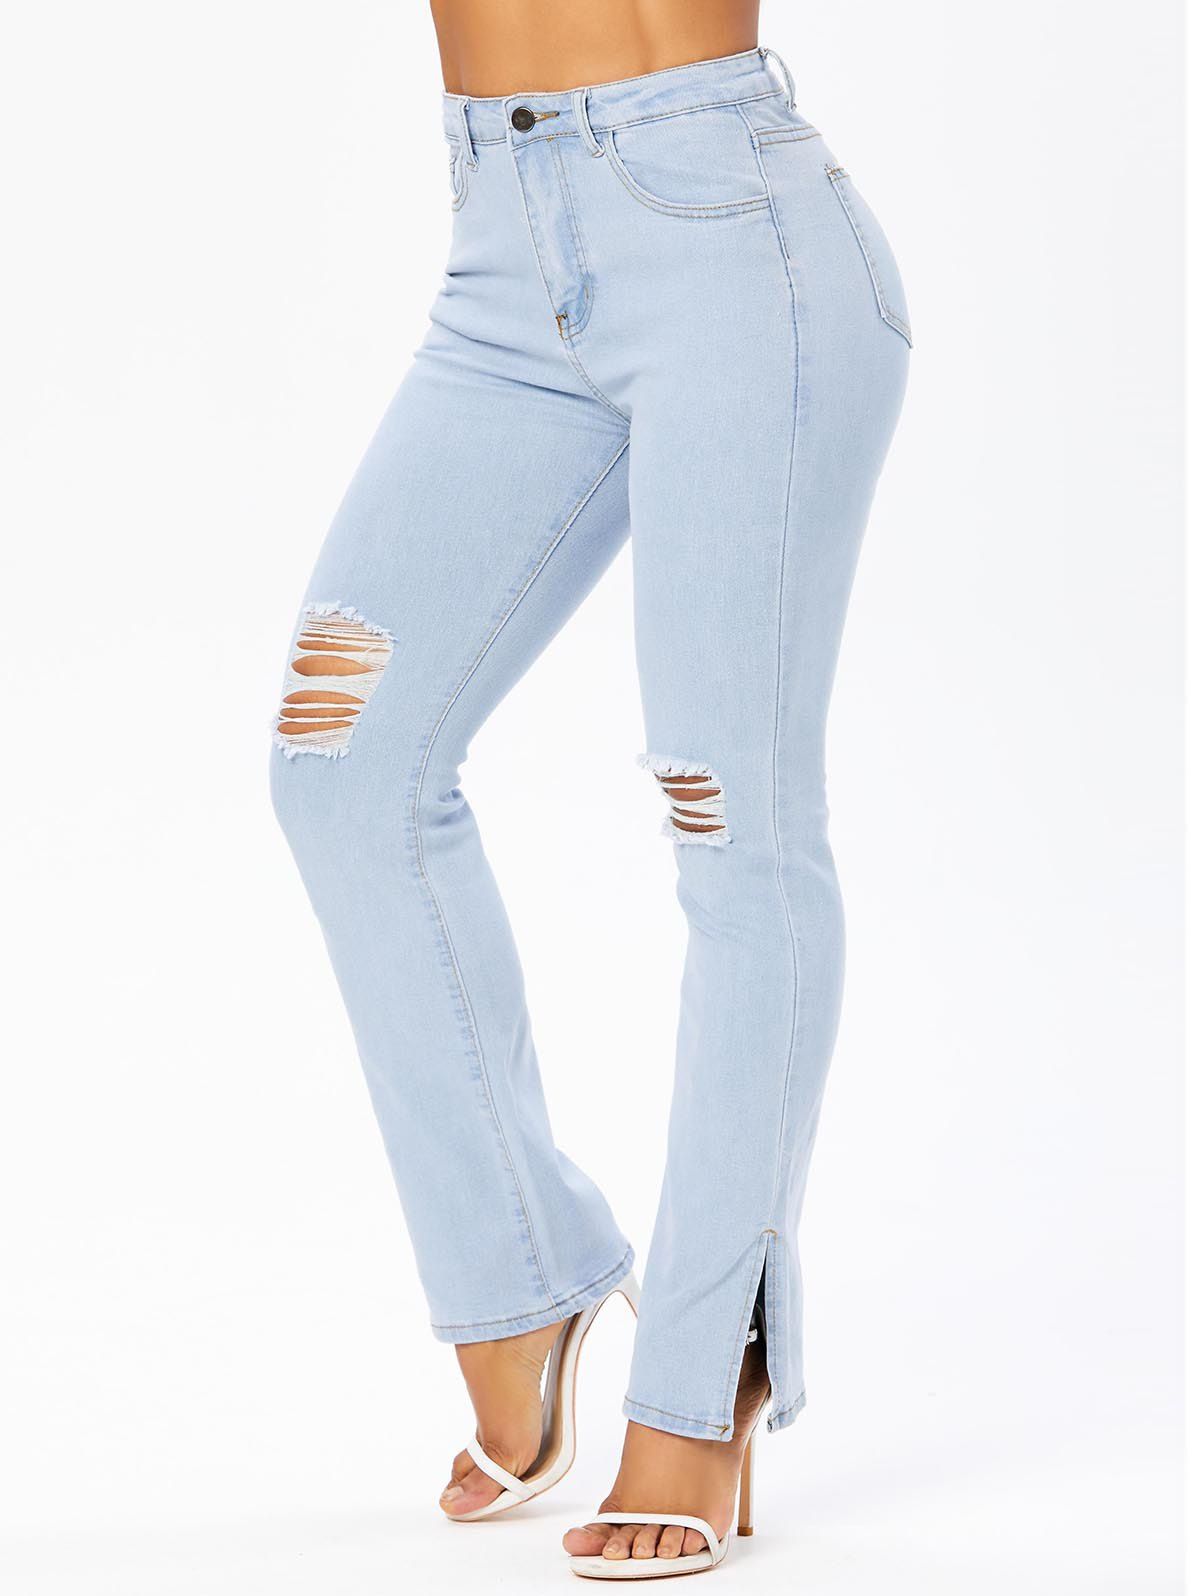 Ripped Jeans Light Wash Pockets Solid Color Slit Zipper Fly Trendy Long Denim Pants 